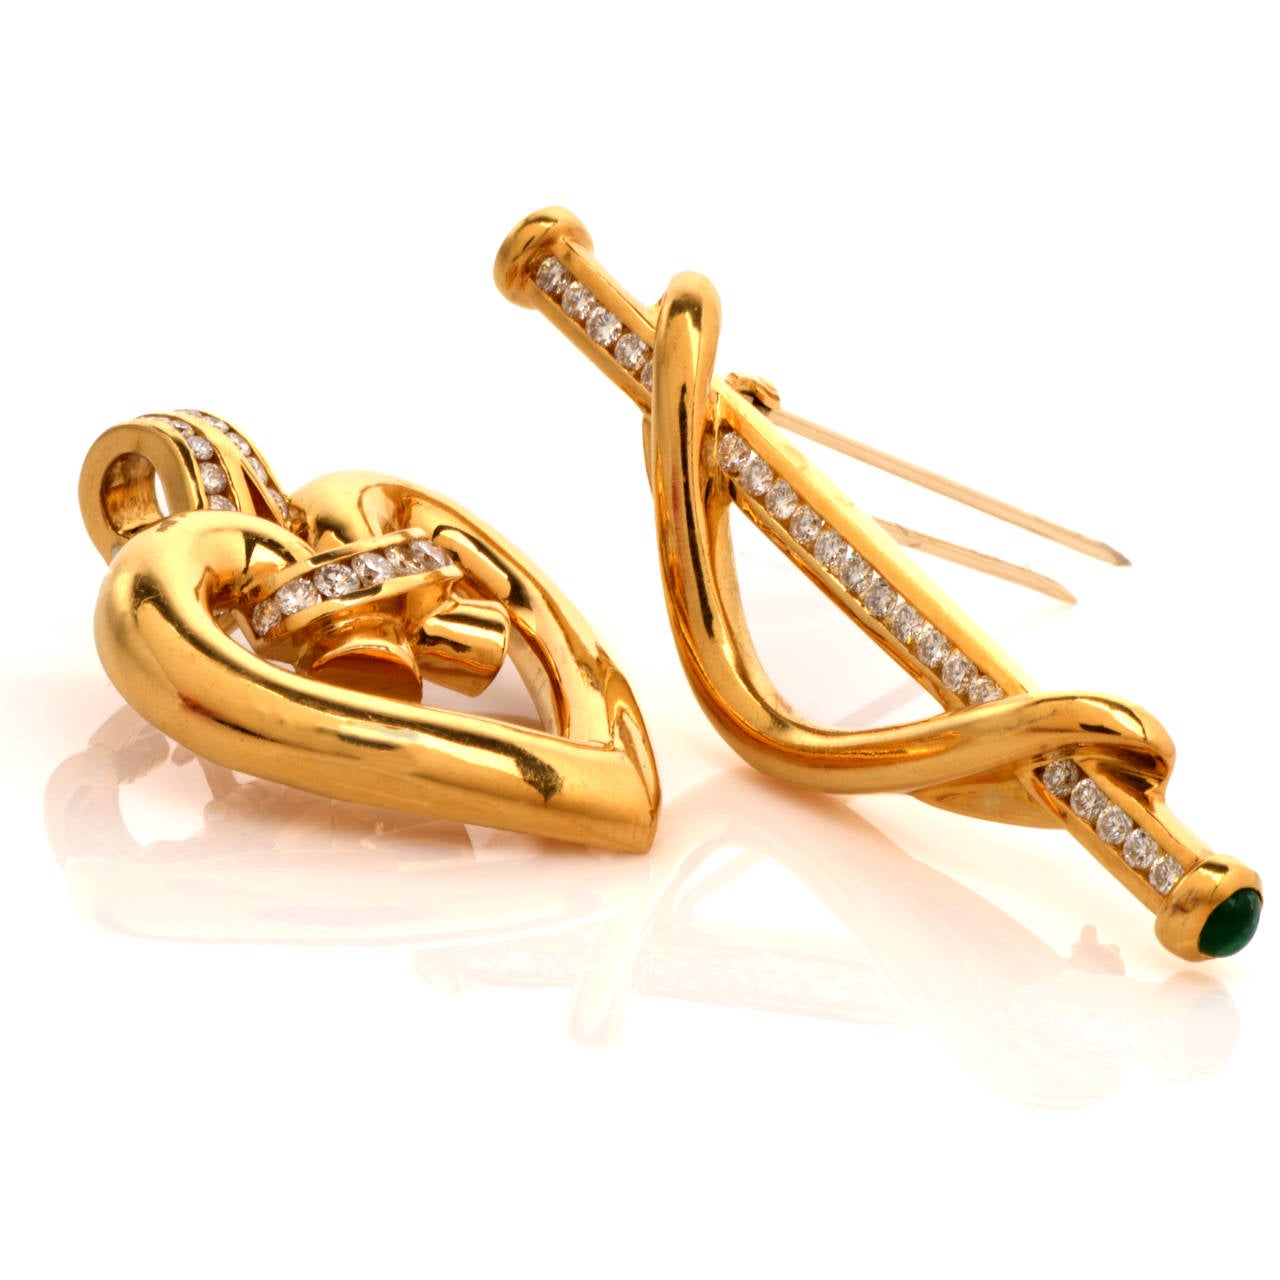 Krypell Emerald Diamond Gold Heart Pendant Brooch Pin 1